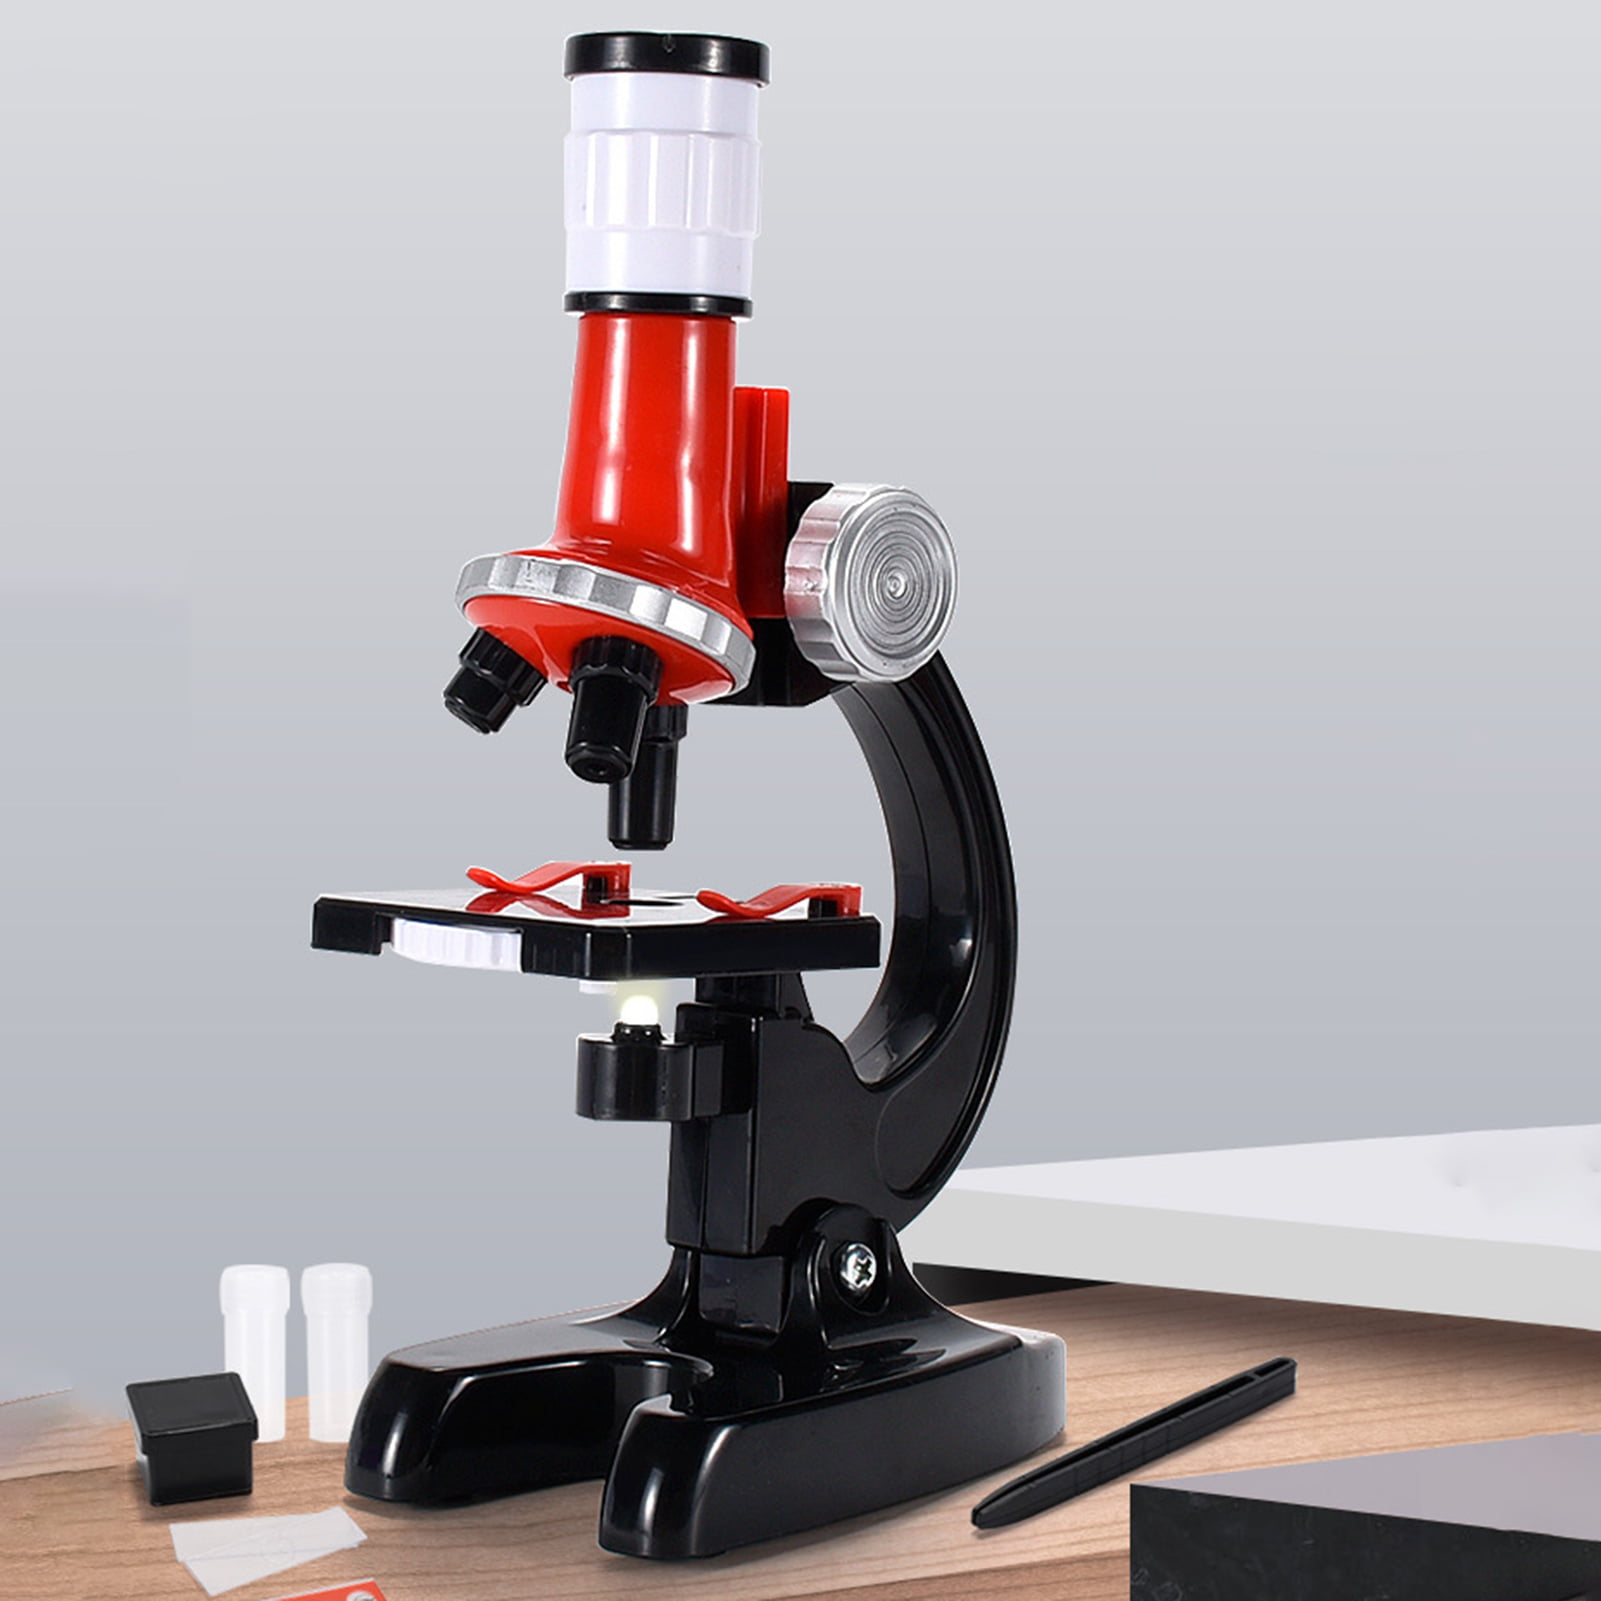 Jouet de microscope 100x, 400x et 1200x Loupe Science Kit de